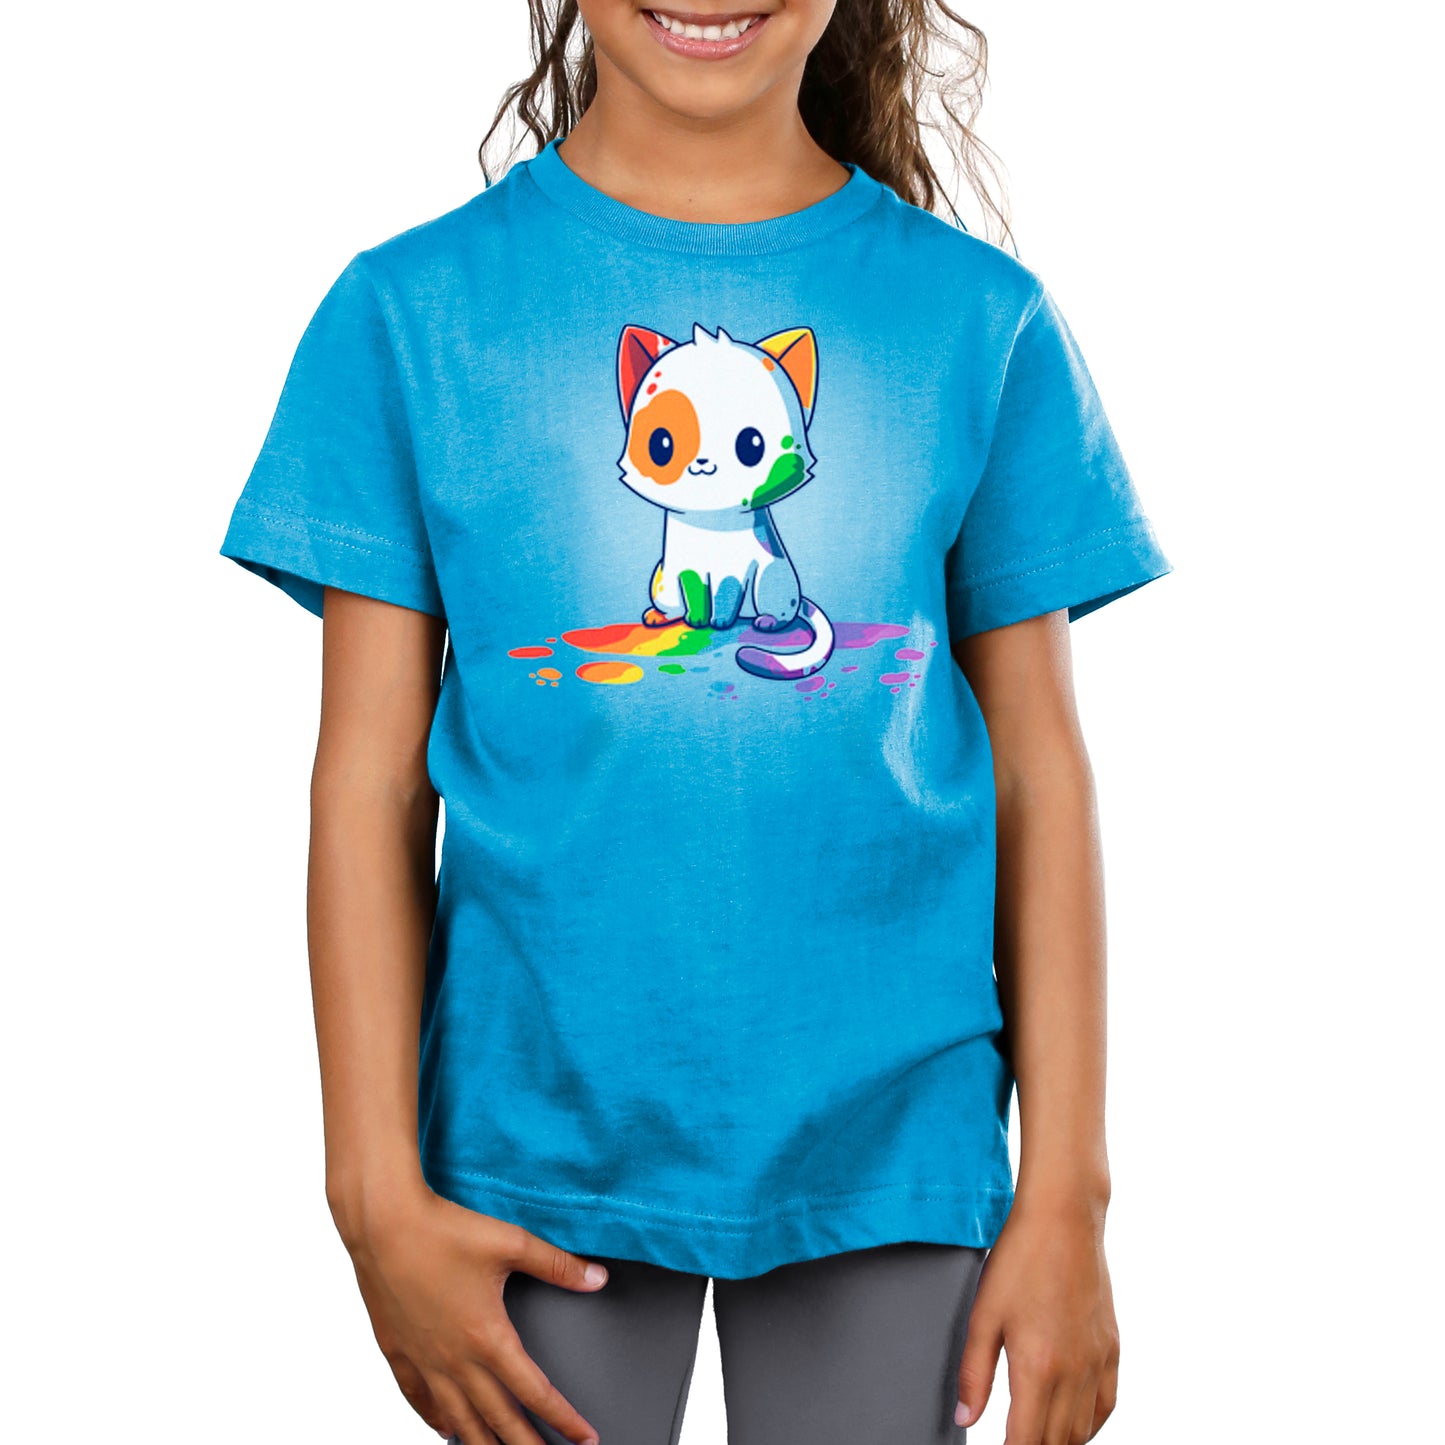 A girl wearing a TeeTurtle Rainbow Cat T-shirt.